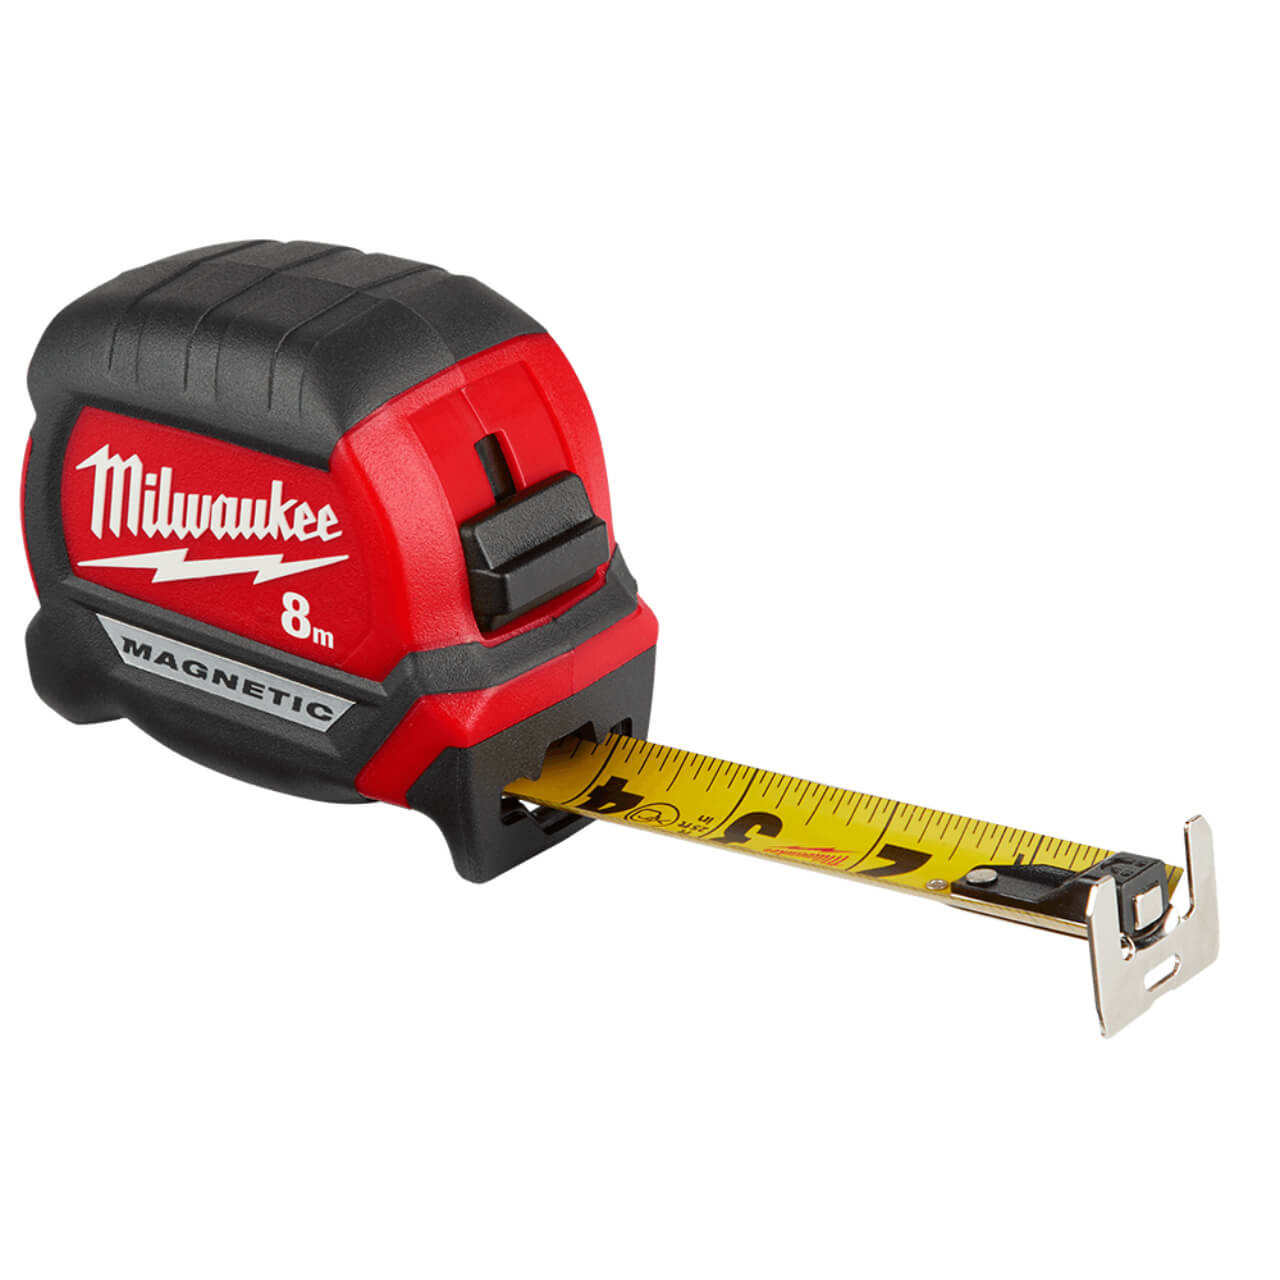 Milwaukee 8m Compact Magnetic Tape Measure